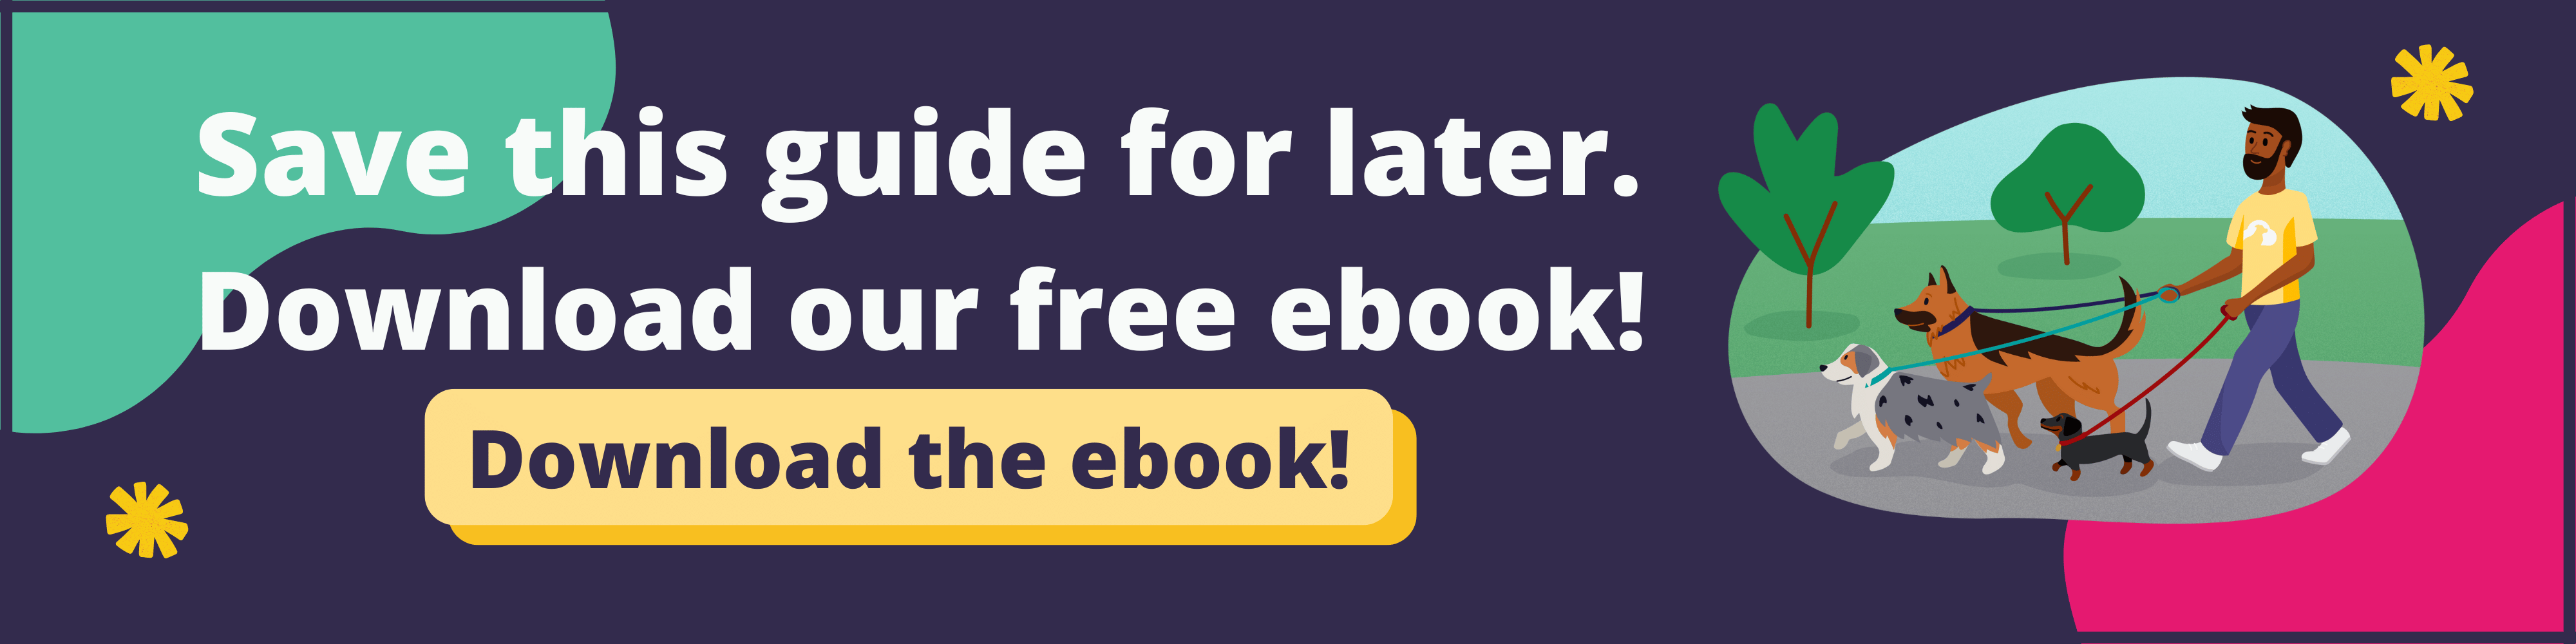 Ebook-CTA-how-to-start-ending